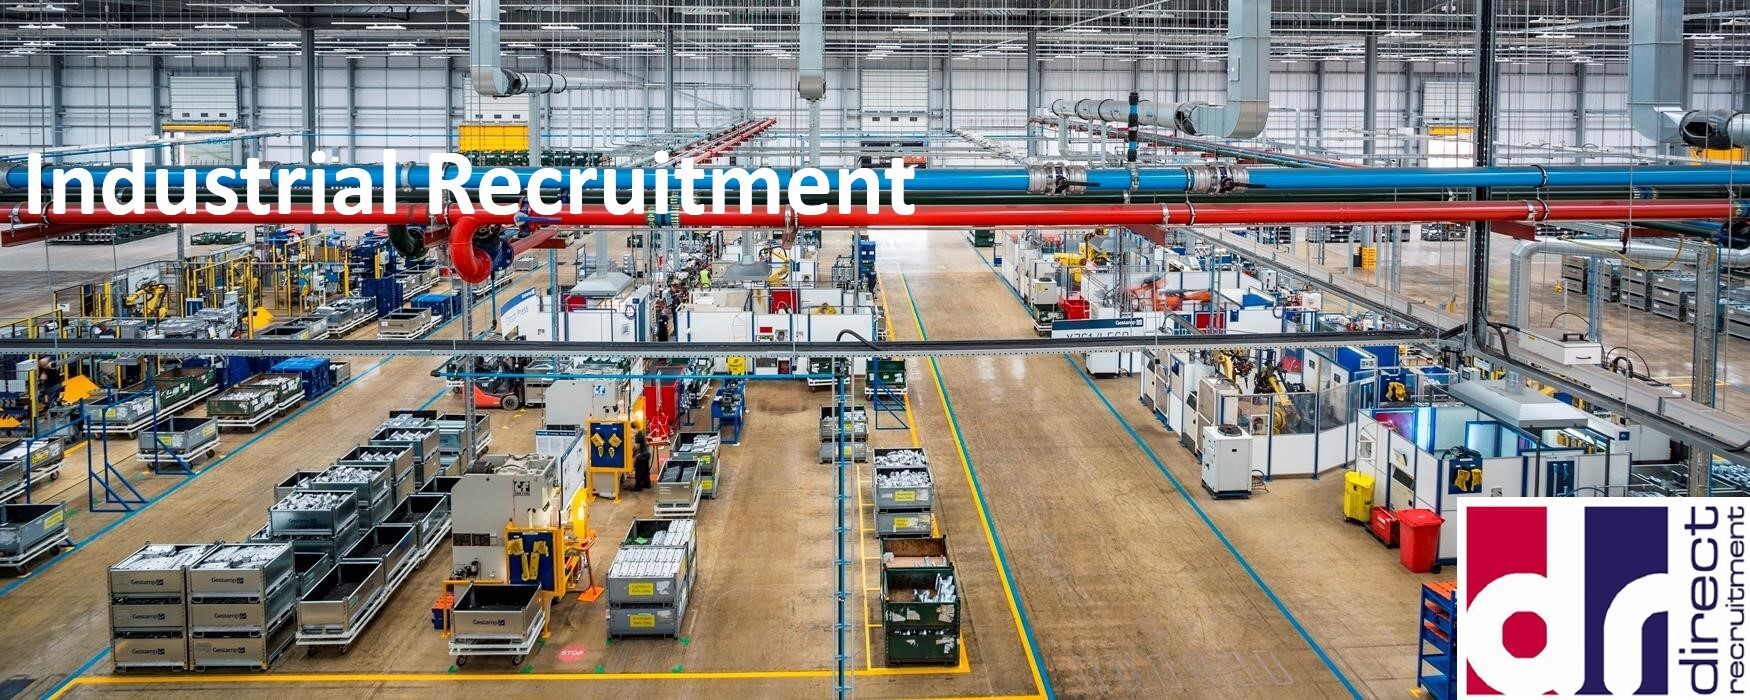 industrial recruitment agency uk